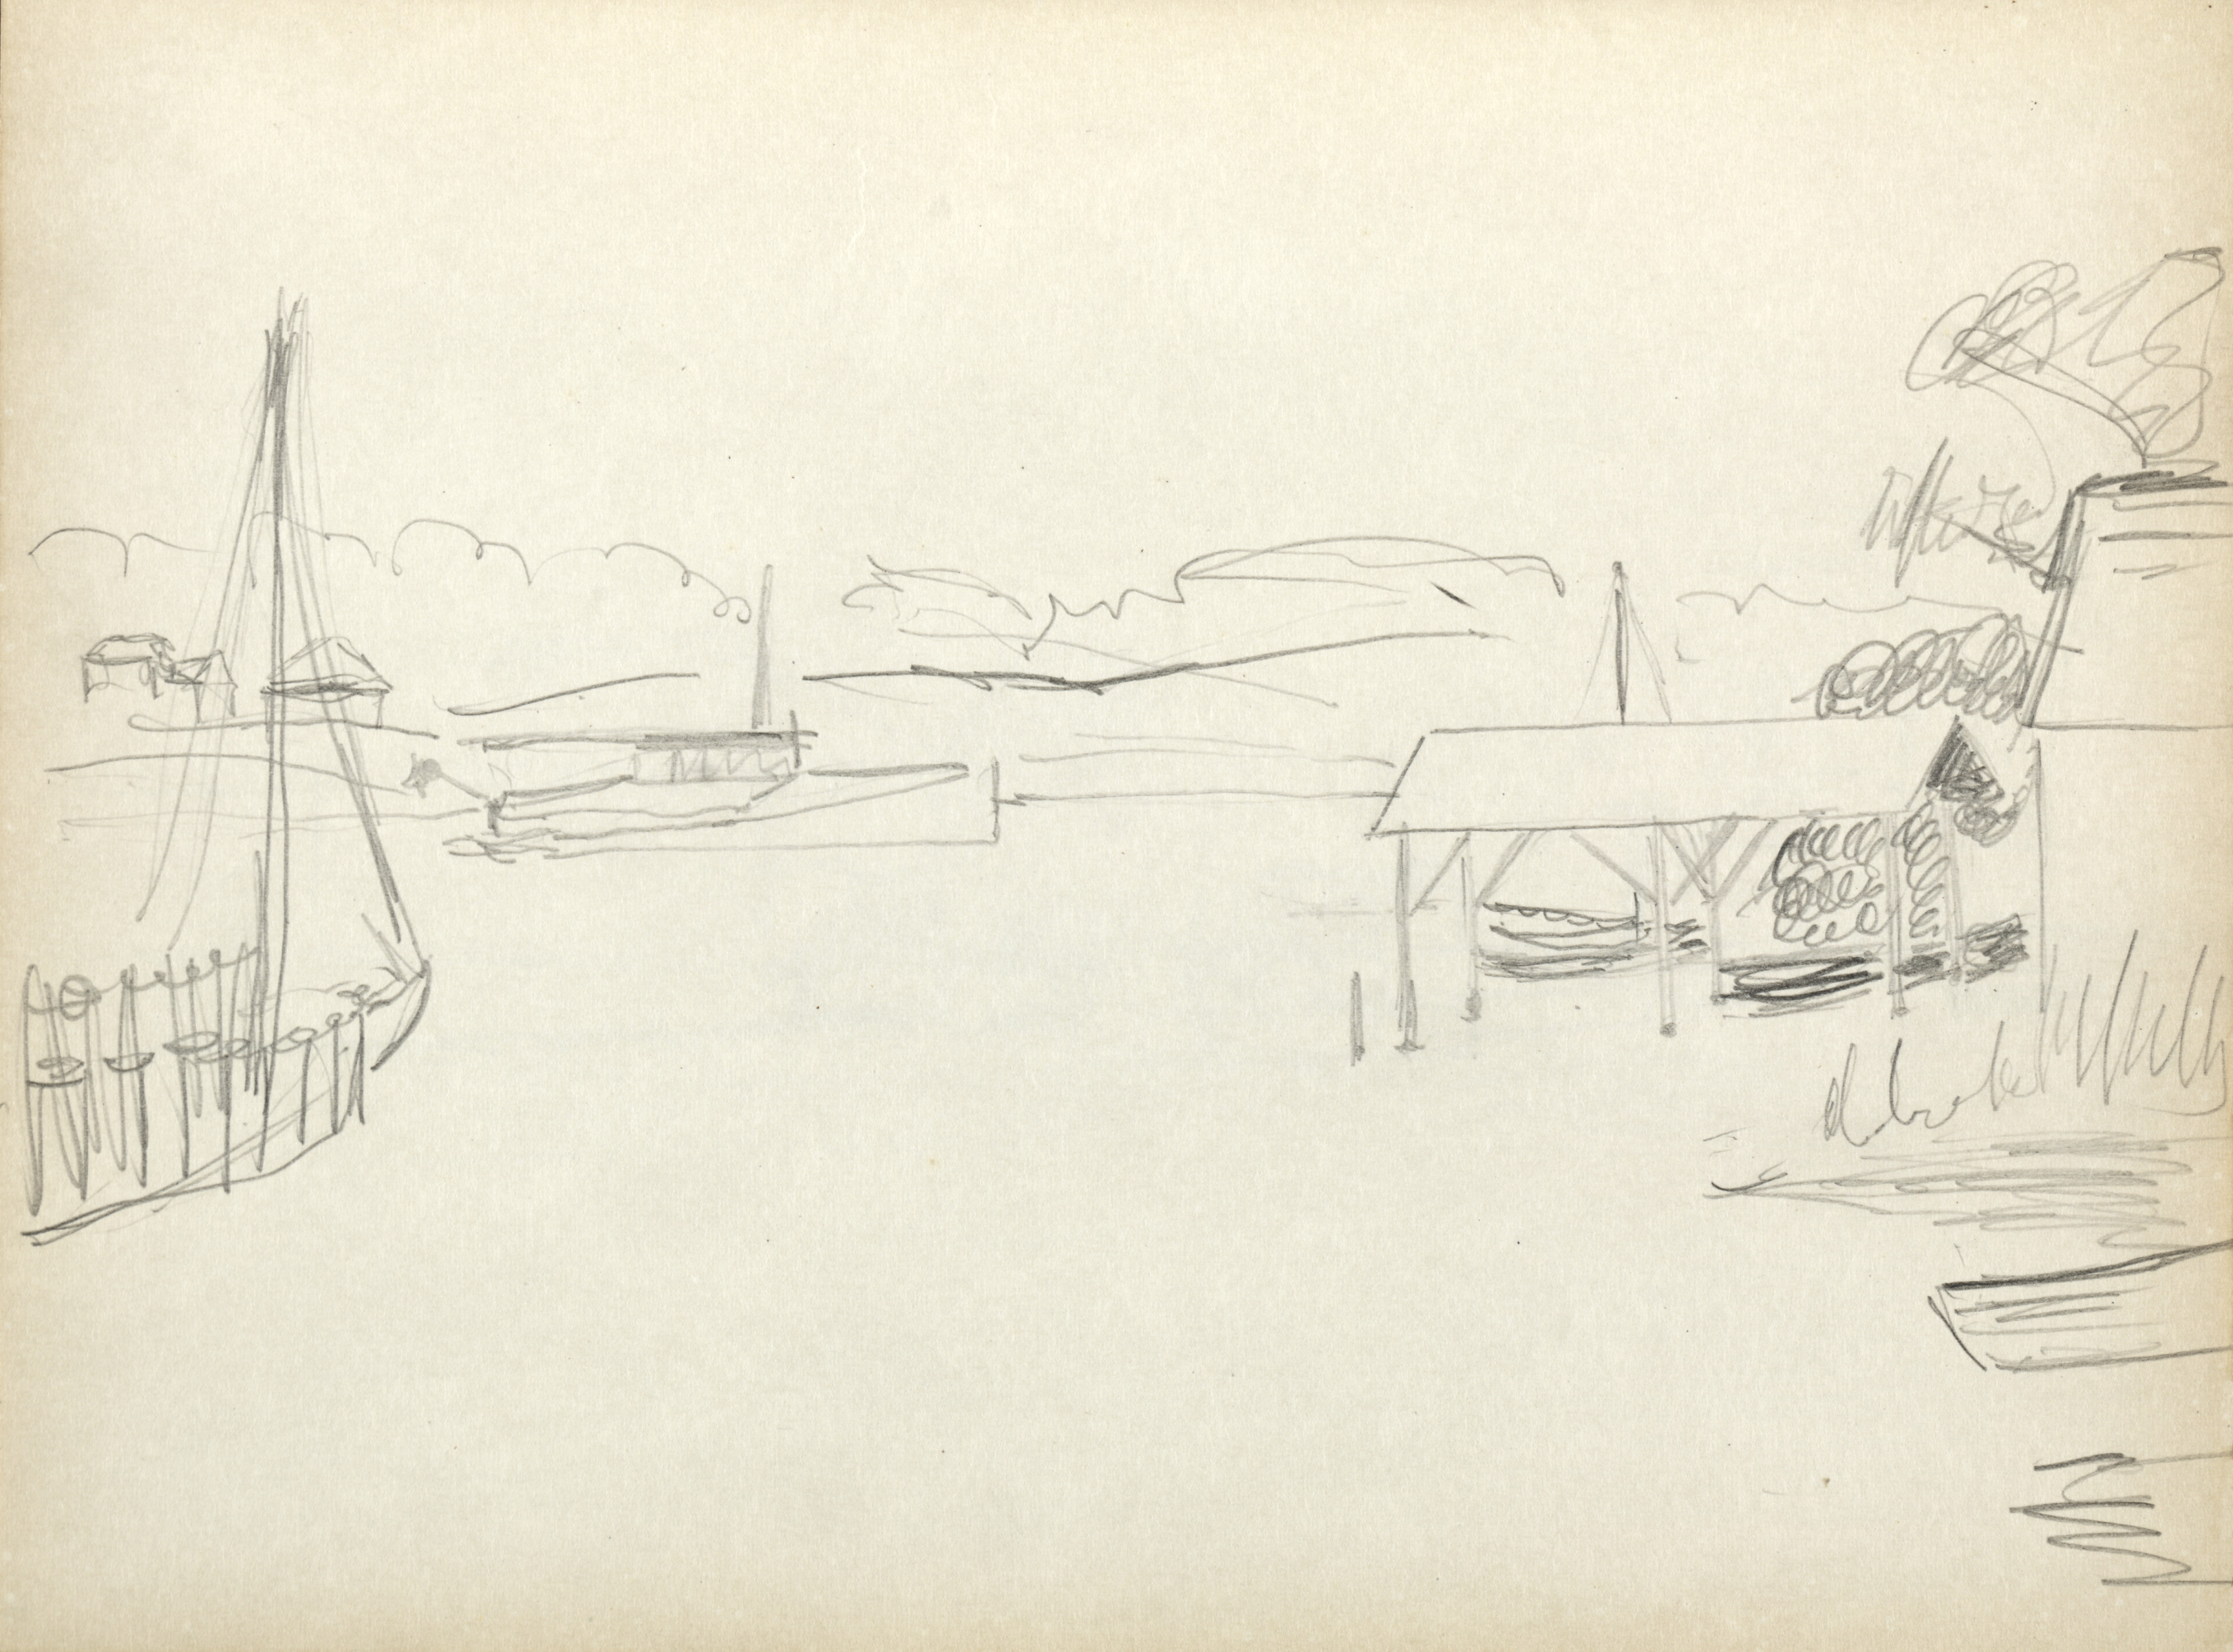 Sketchbook #1: Landscape with sailboats (page 19)